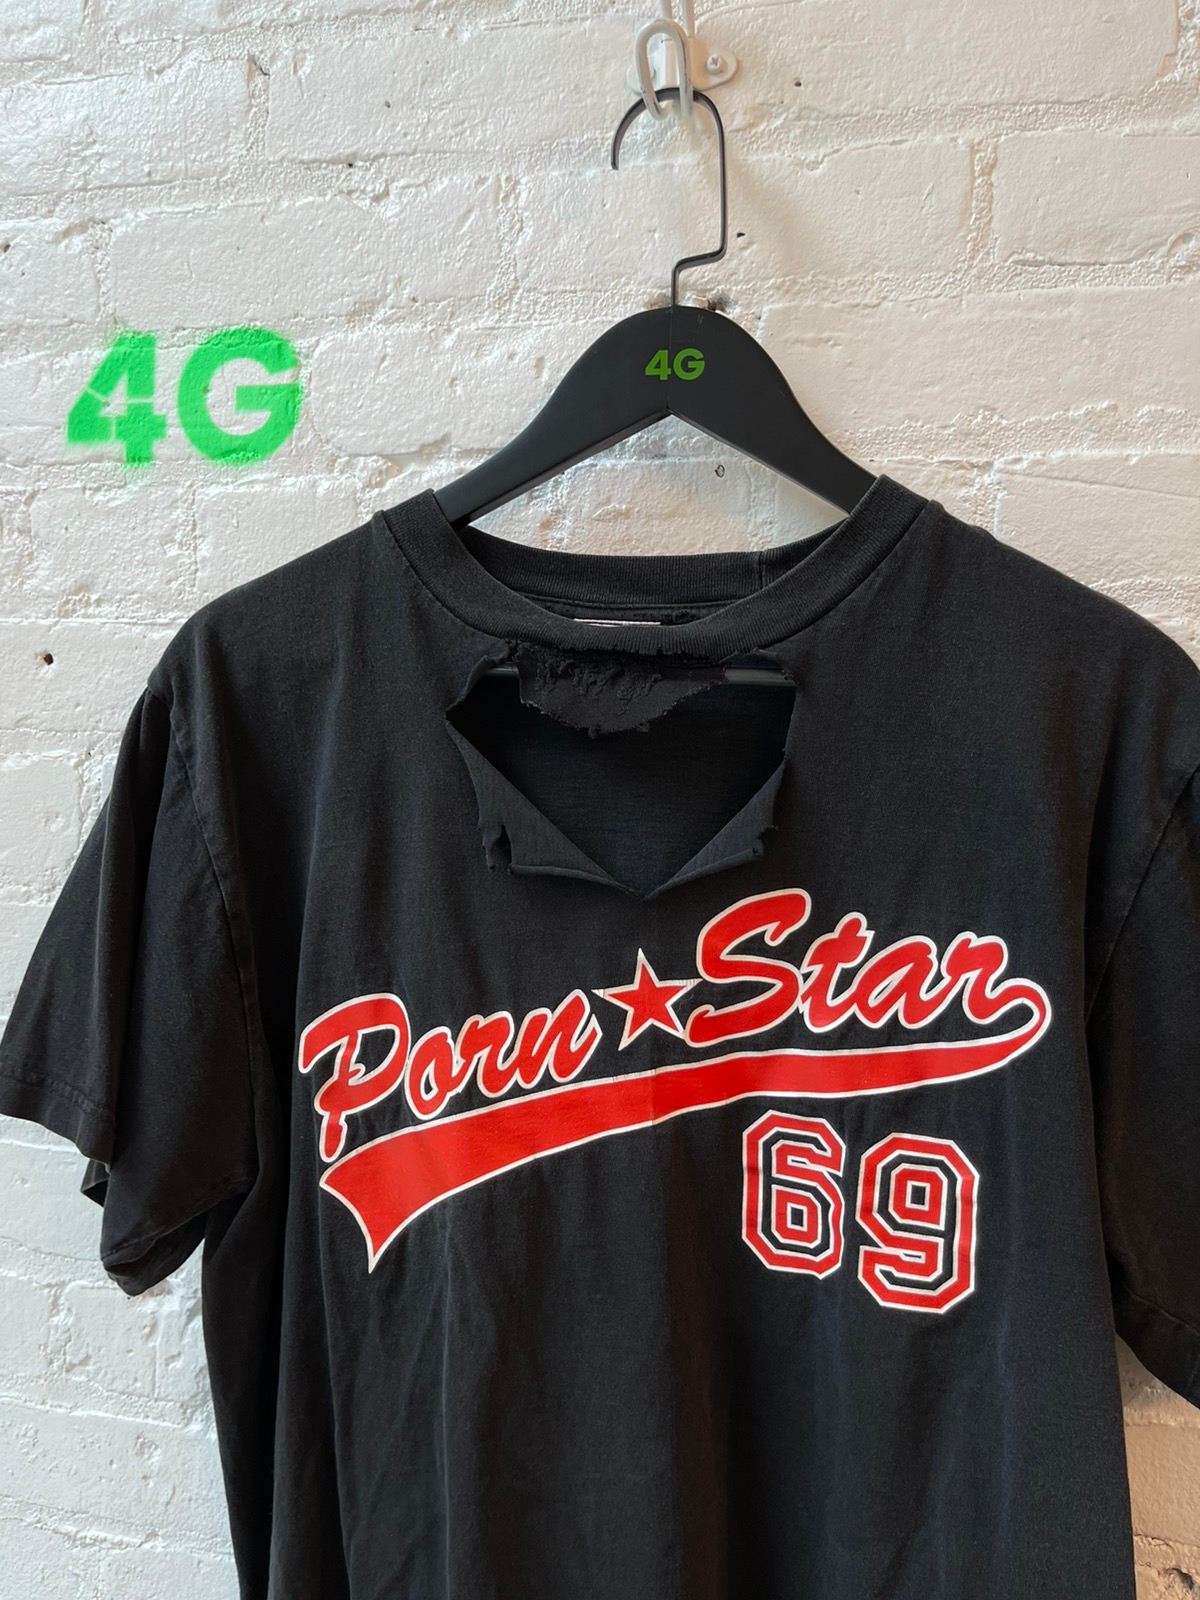 Vintage 90s PORNSTAR PORN STAR 69 THRASHED SHIRT